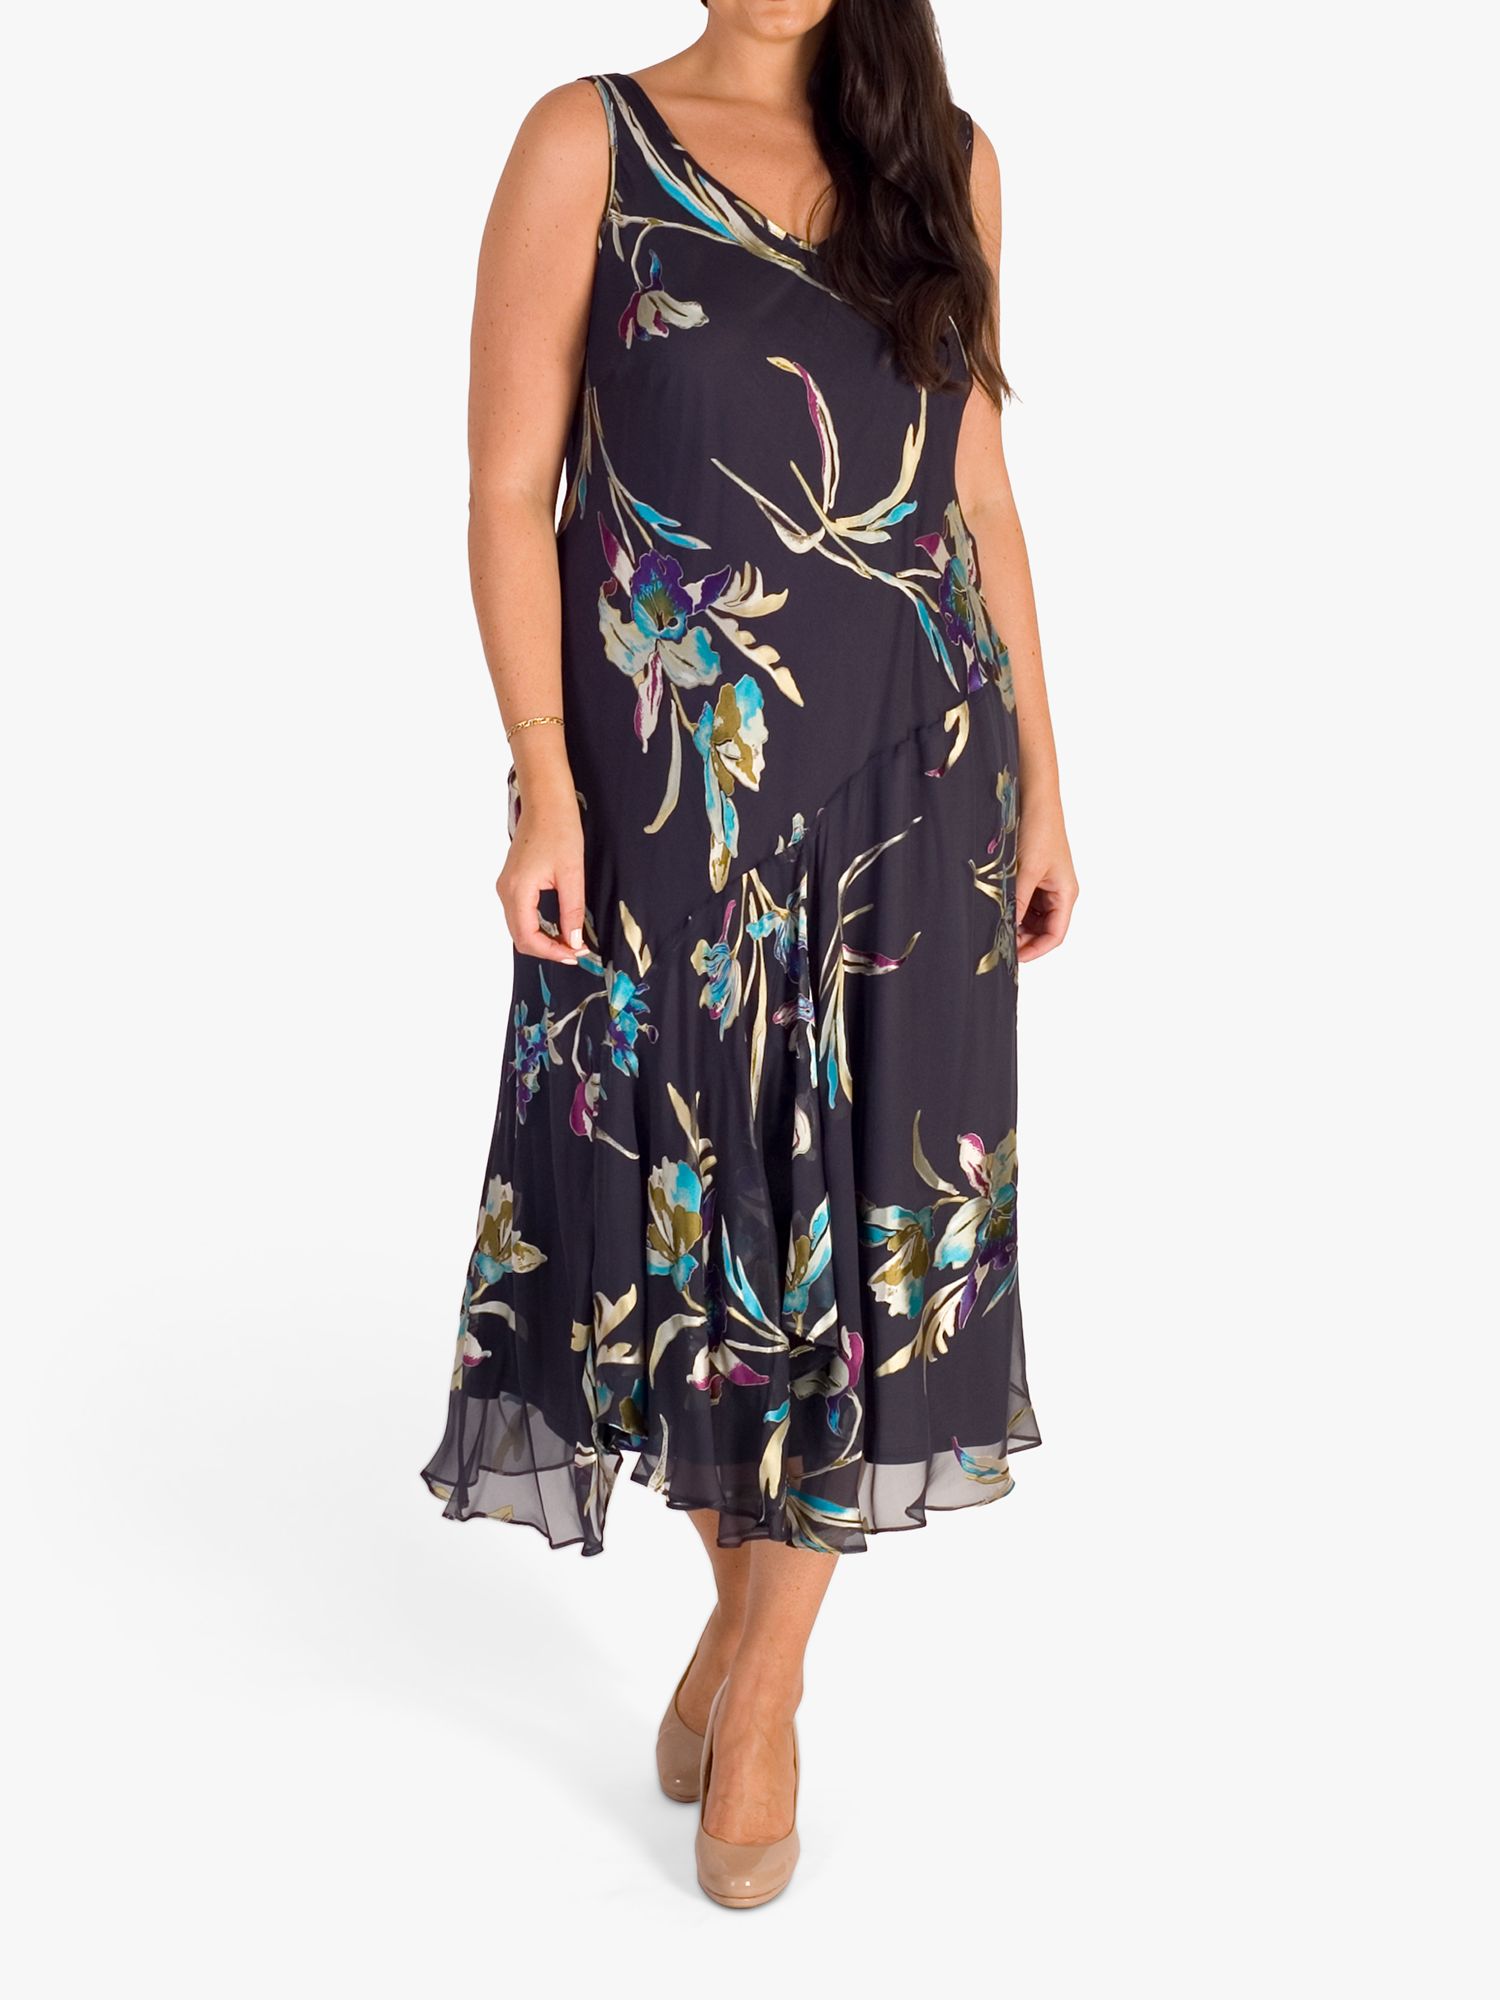 Chesca Devoree Floral Print Midi Dress, Pewter/Turquoise